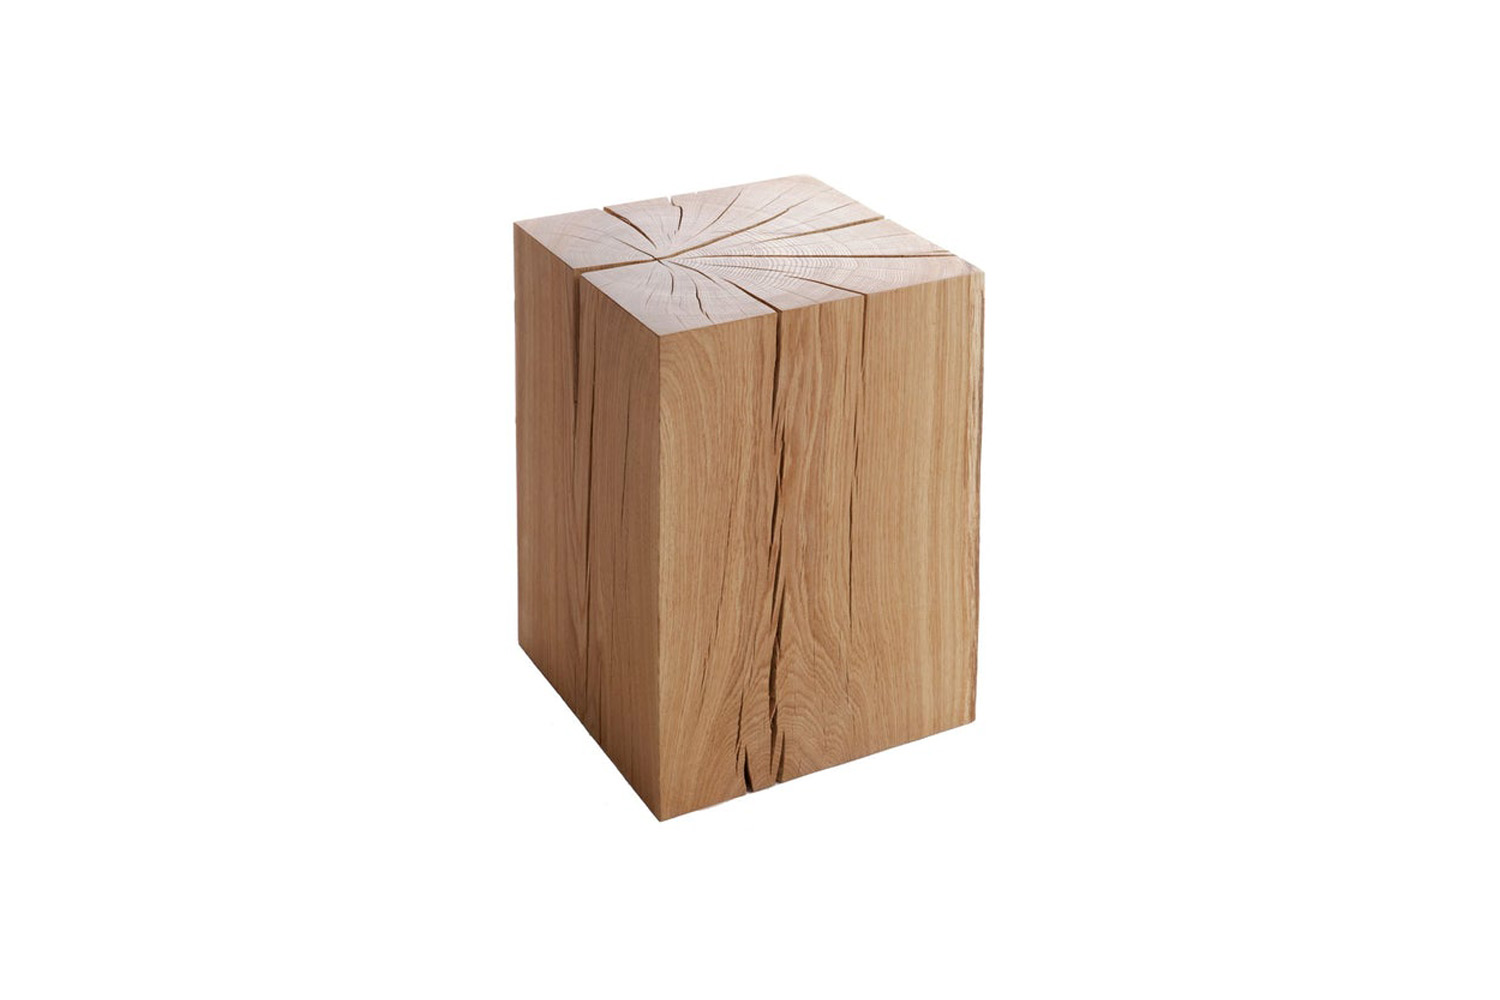 designed by kari vitanen for nikari, the arte biennale stool comes in oak. cont 11